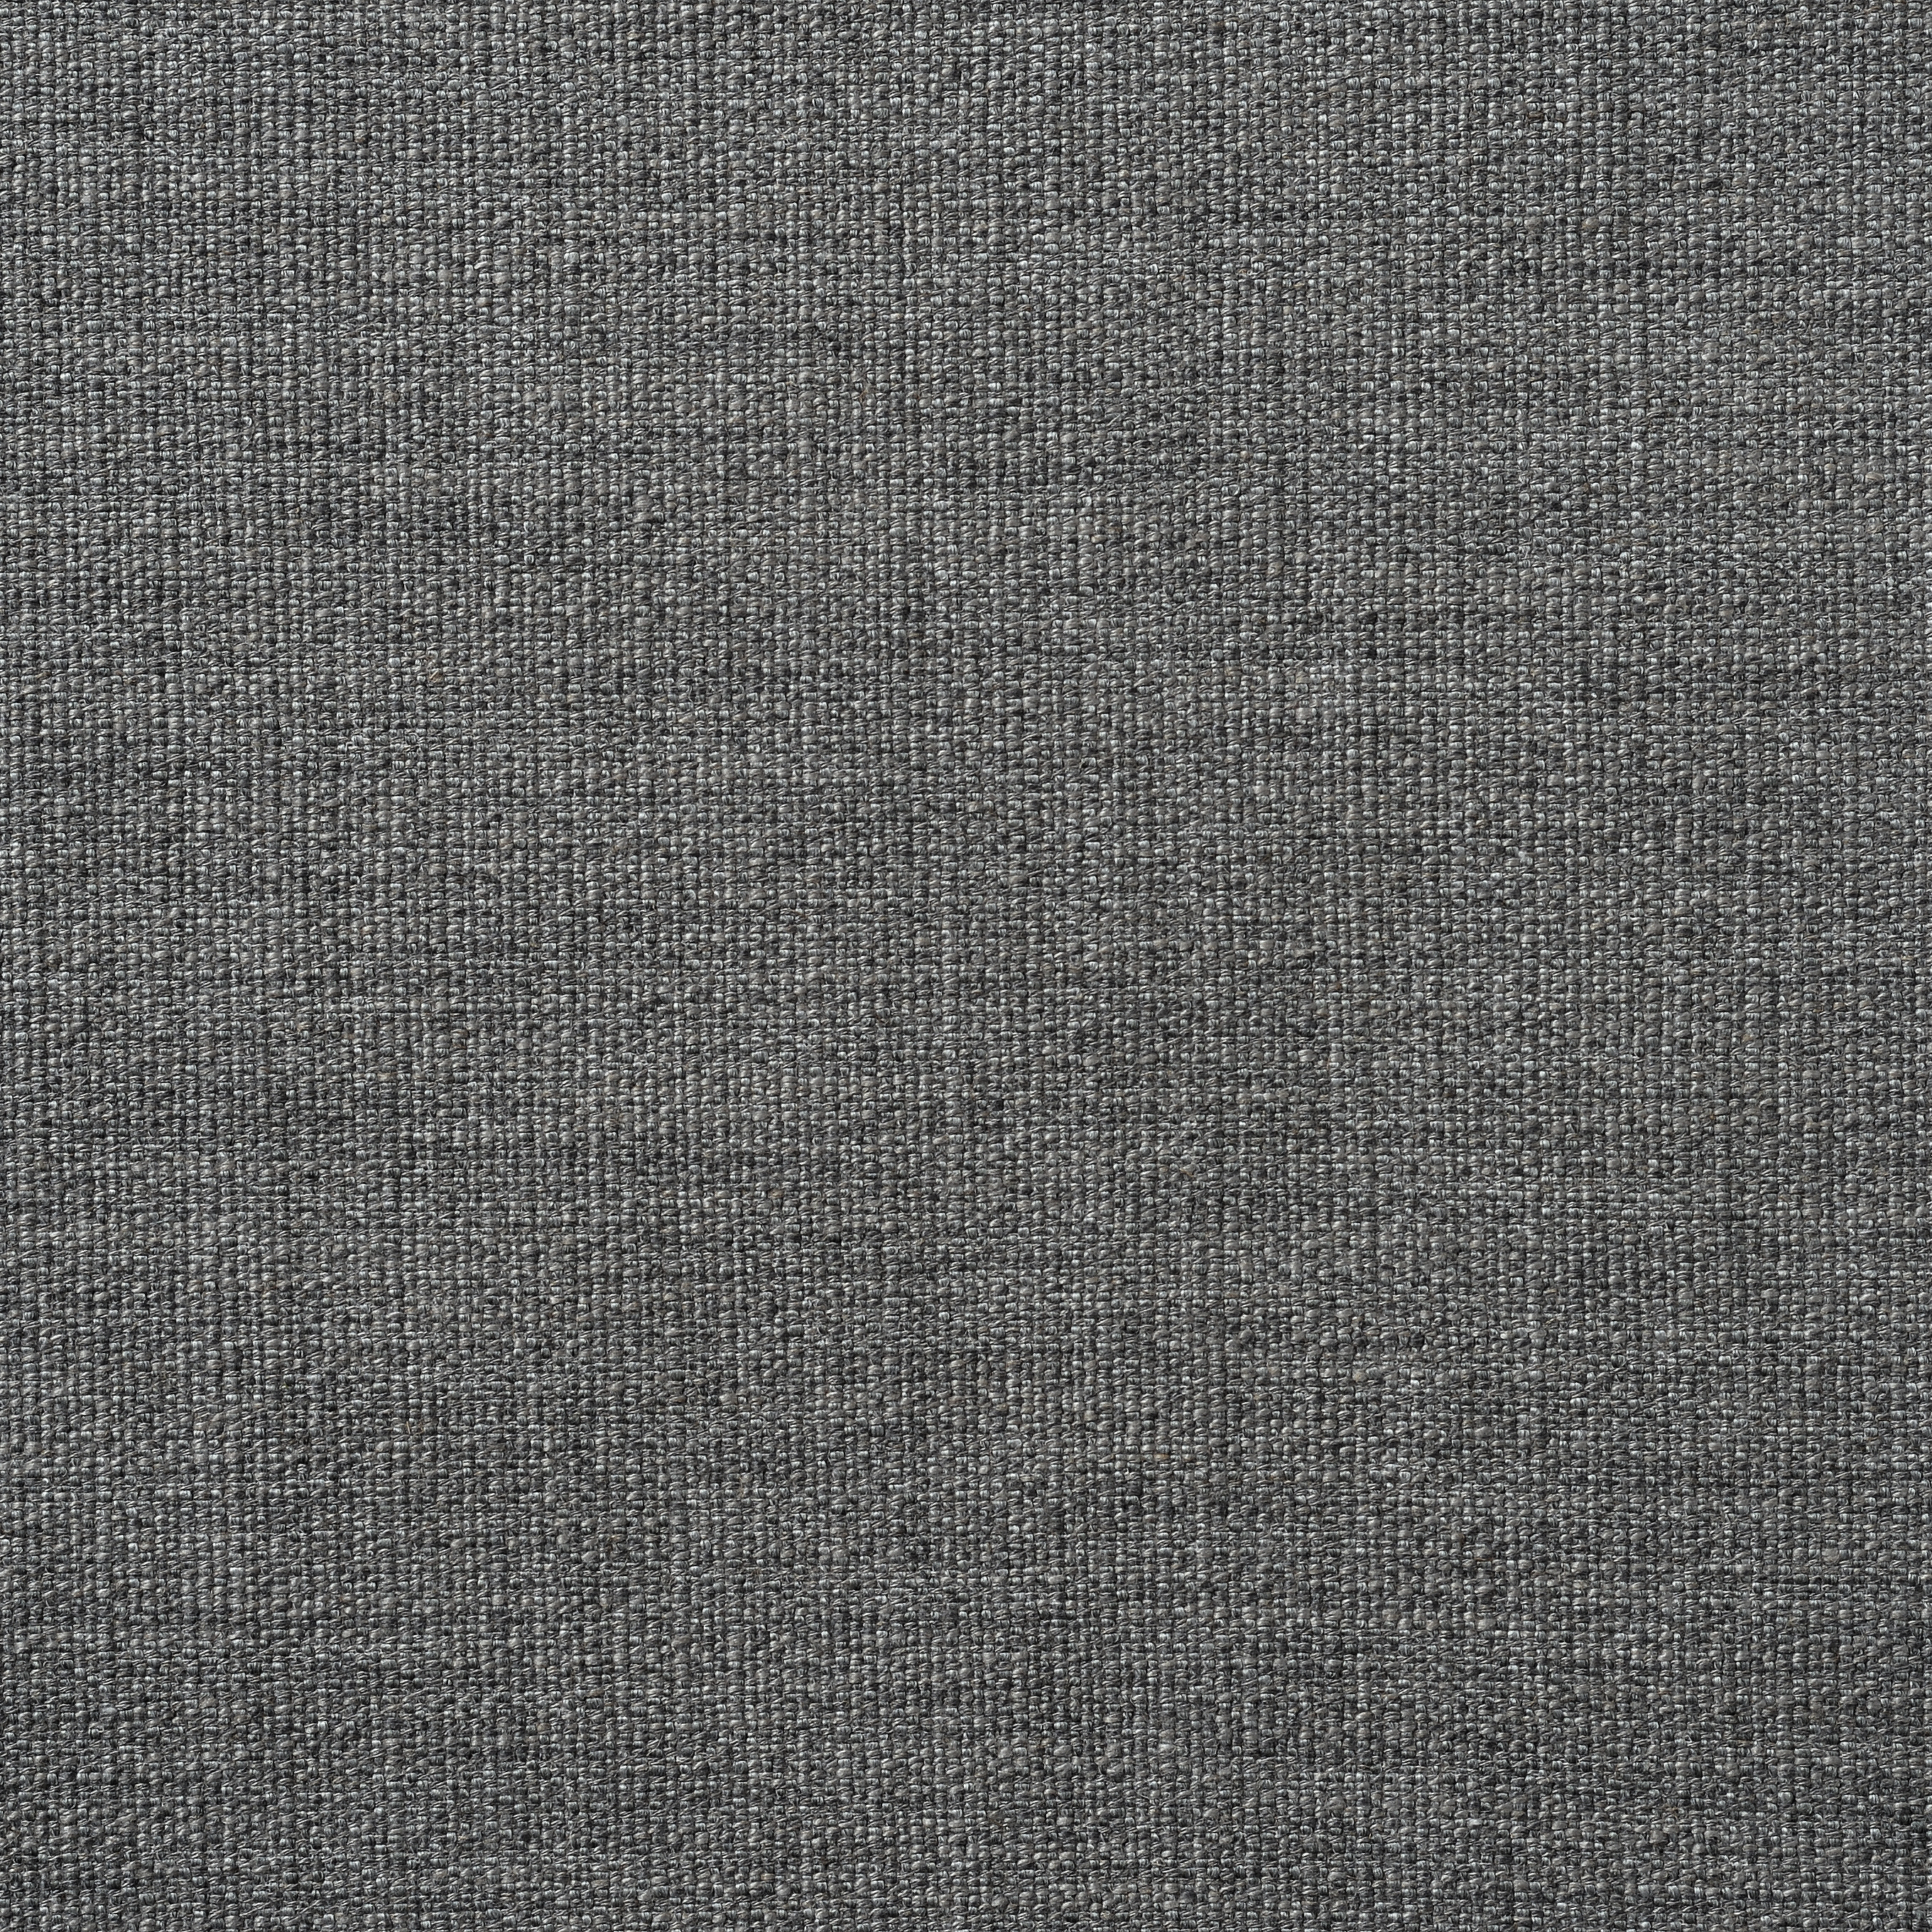 Chadwick Rustic Weave - Grey Marl